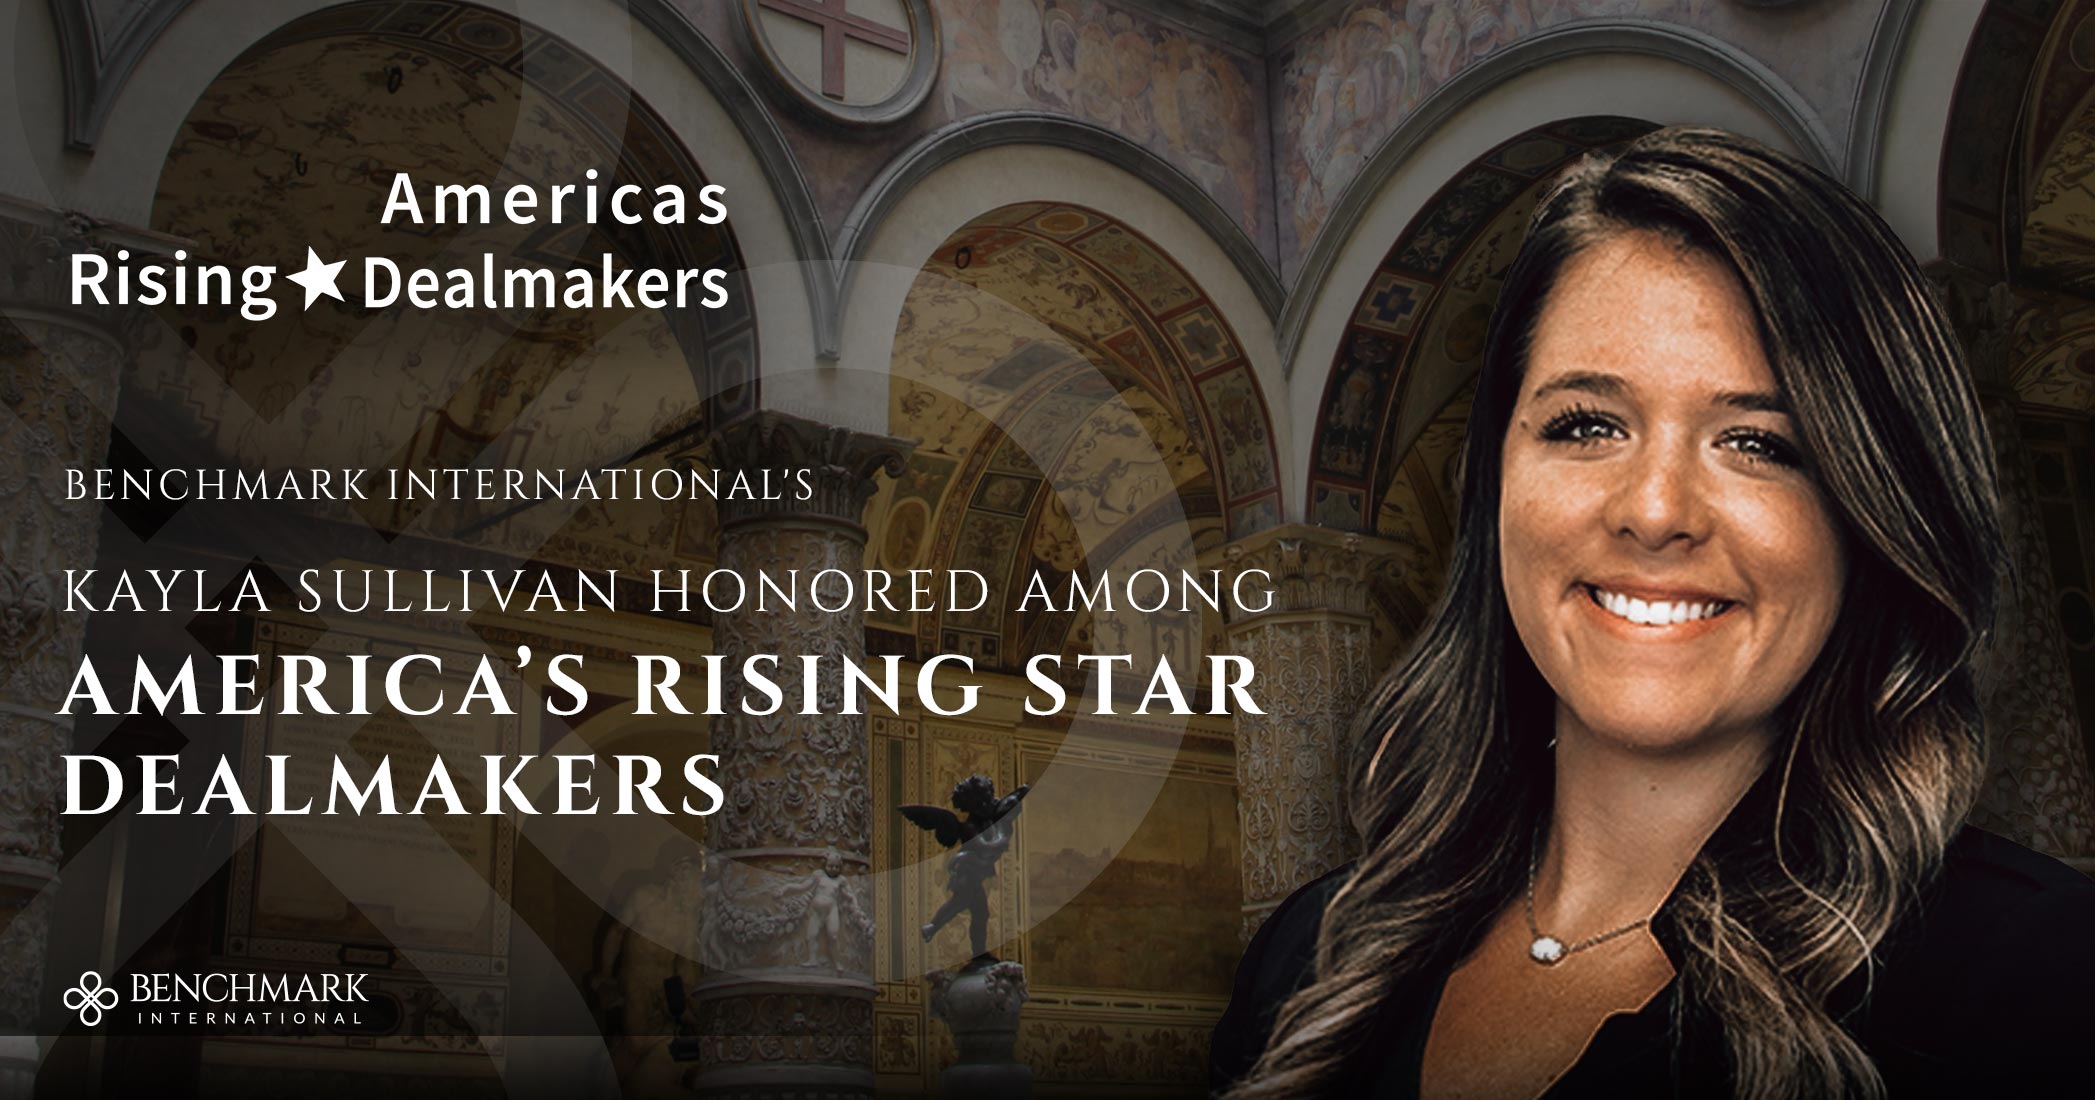 Benchmark International's Kayla Sullivan Honored Among America's Rising Star Dealmakers